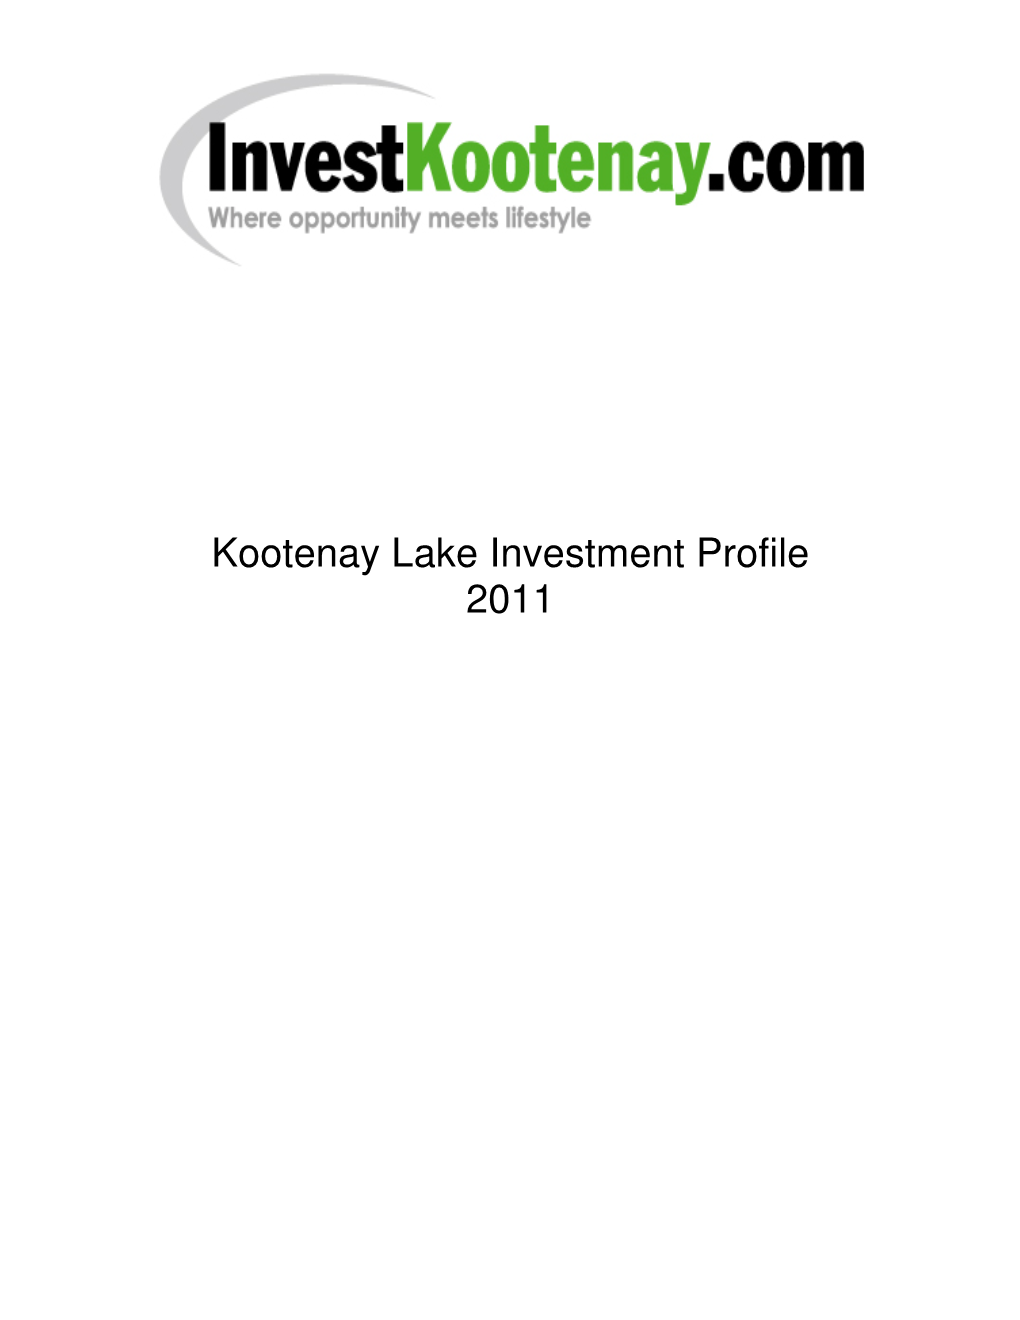 Kootenay Lake Investment Profile 2011